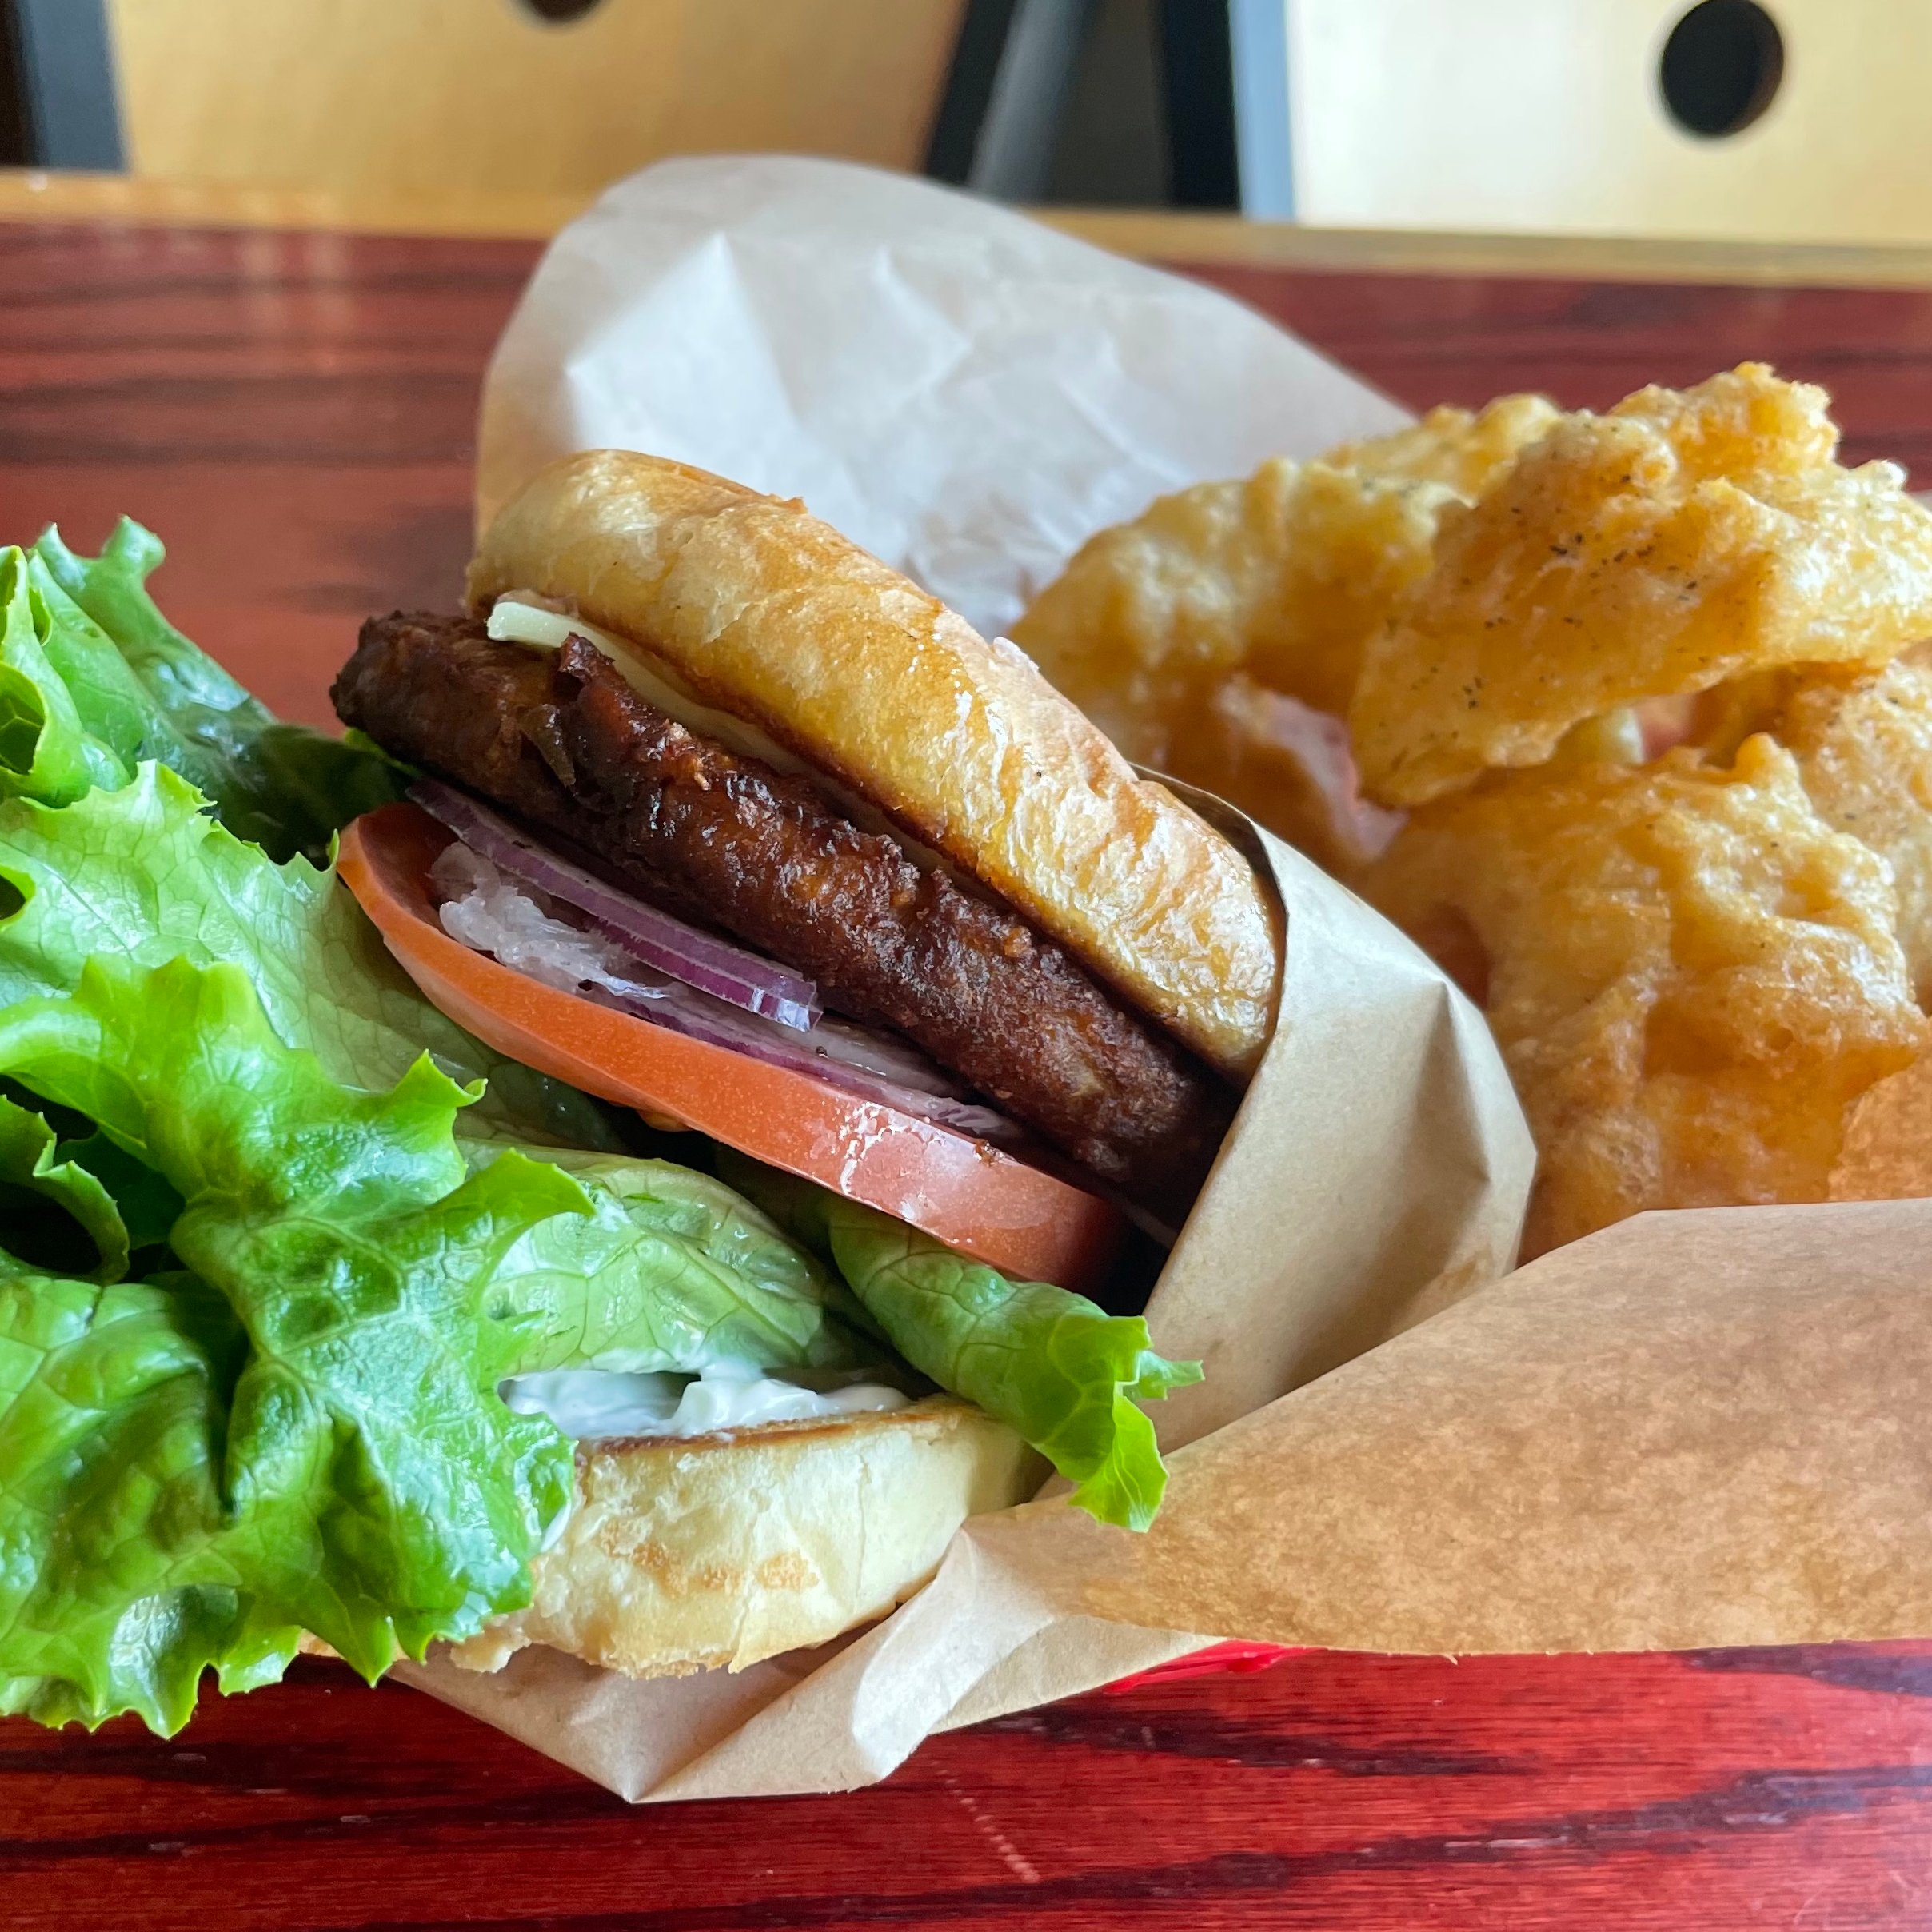 Delicious Veggie Burgers: A Tasty Alternative